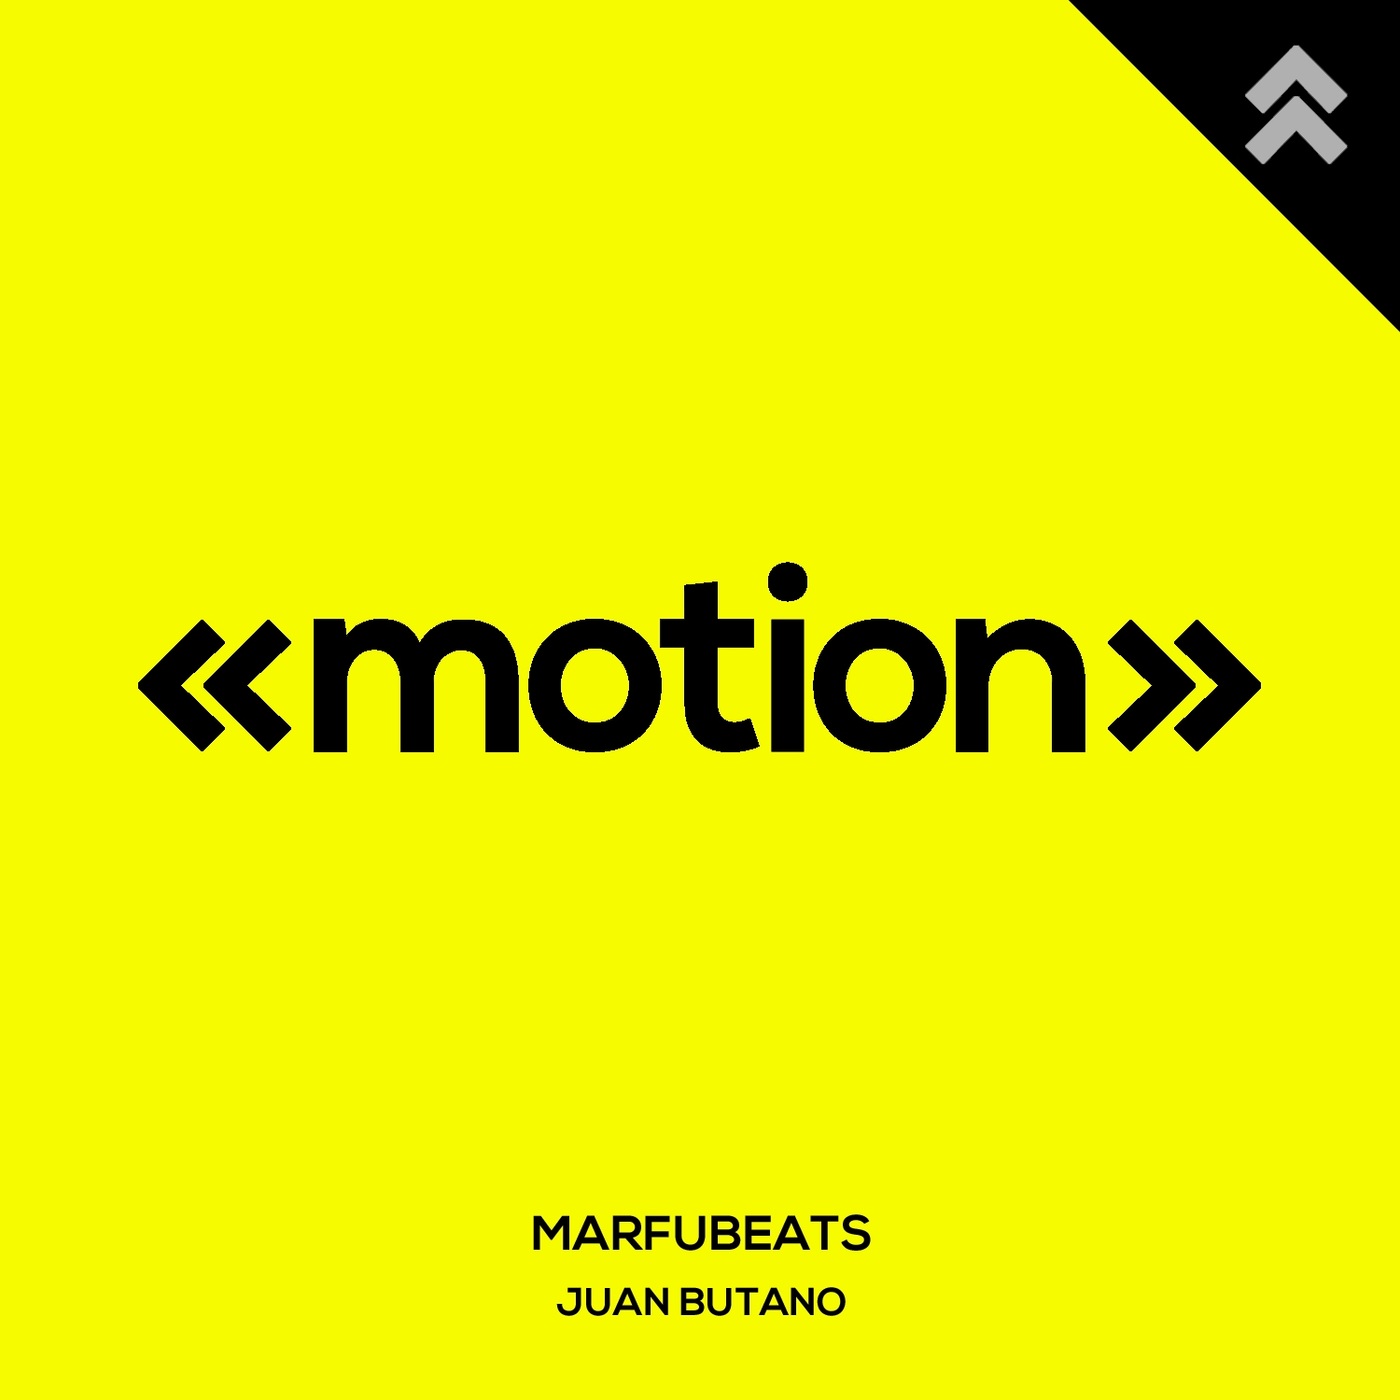 Marfubeats - Juan Butano / motion